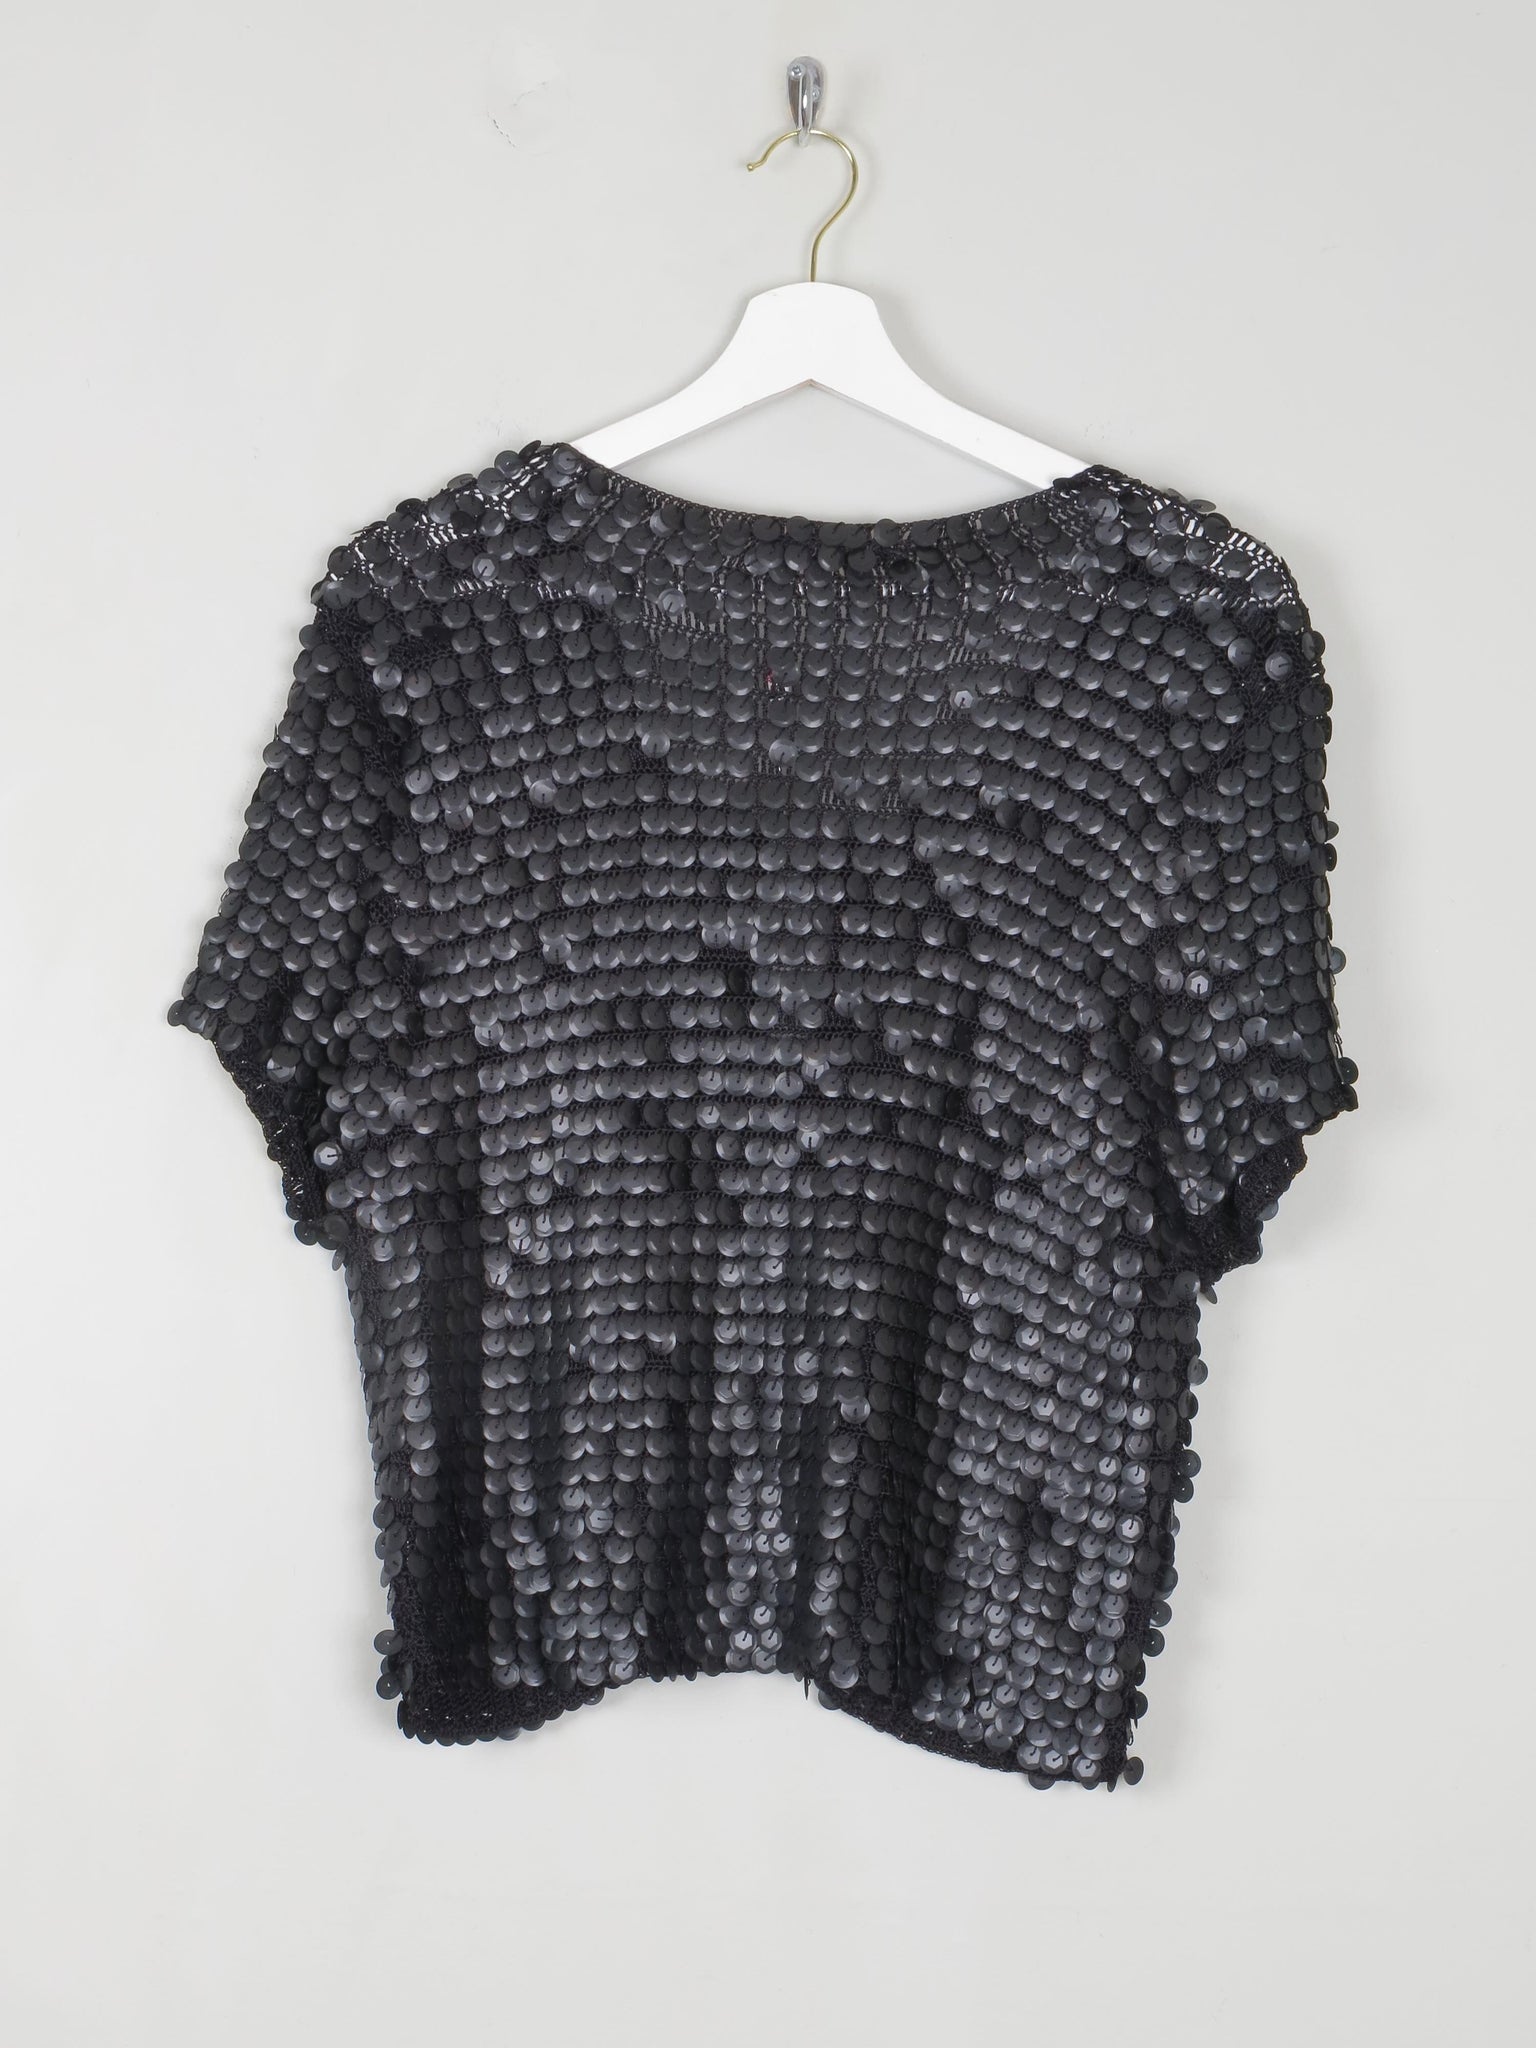 Women's Black Sequin & Crochet Bolero By Rodier Paris S/M Unworn - The Harlequin